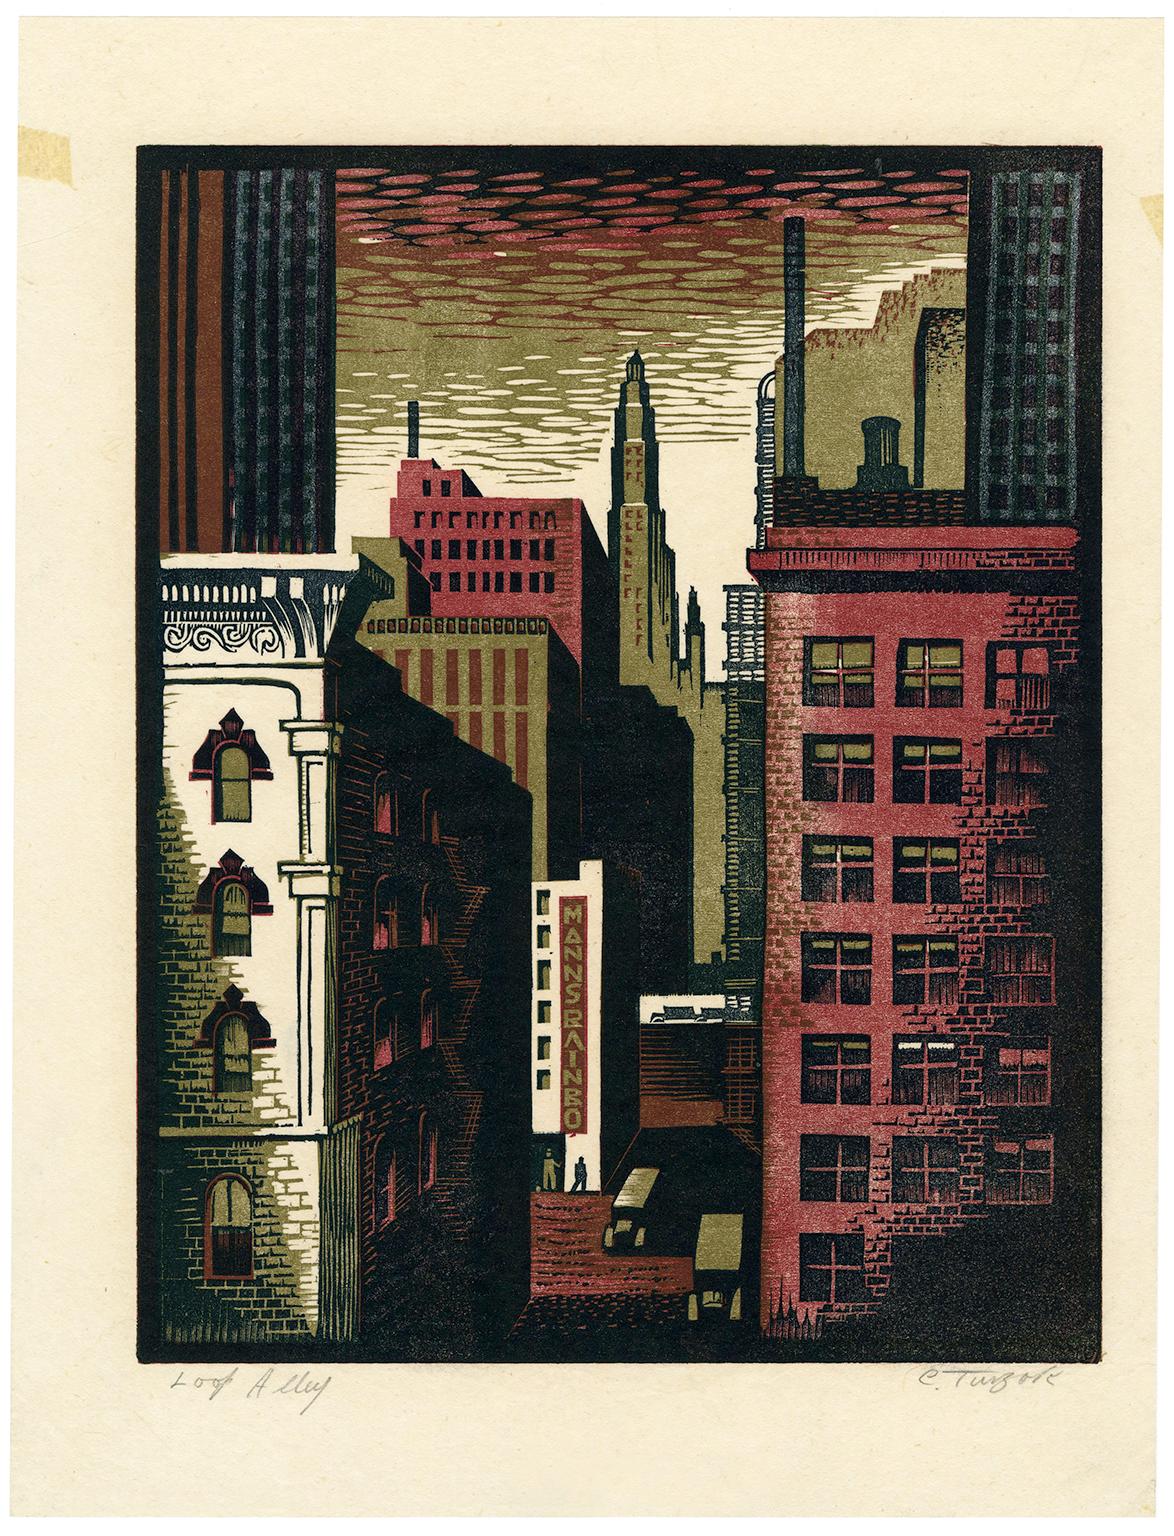 Loop Alley (Chicago) - Print by Charles Turzak